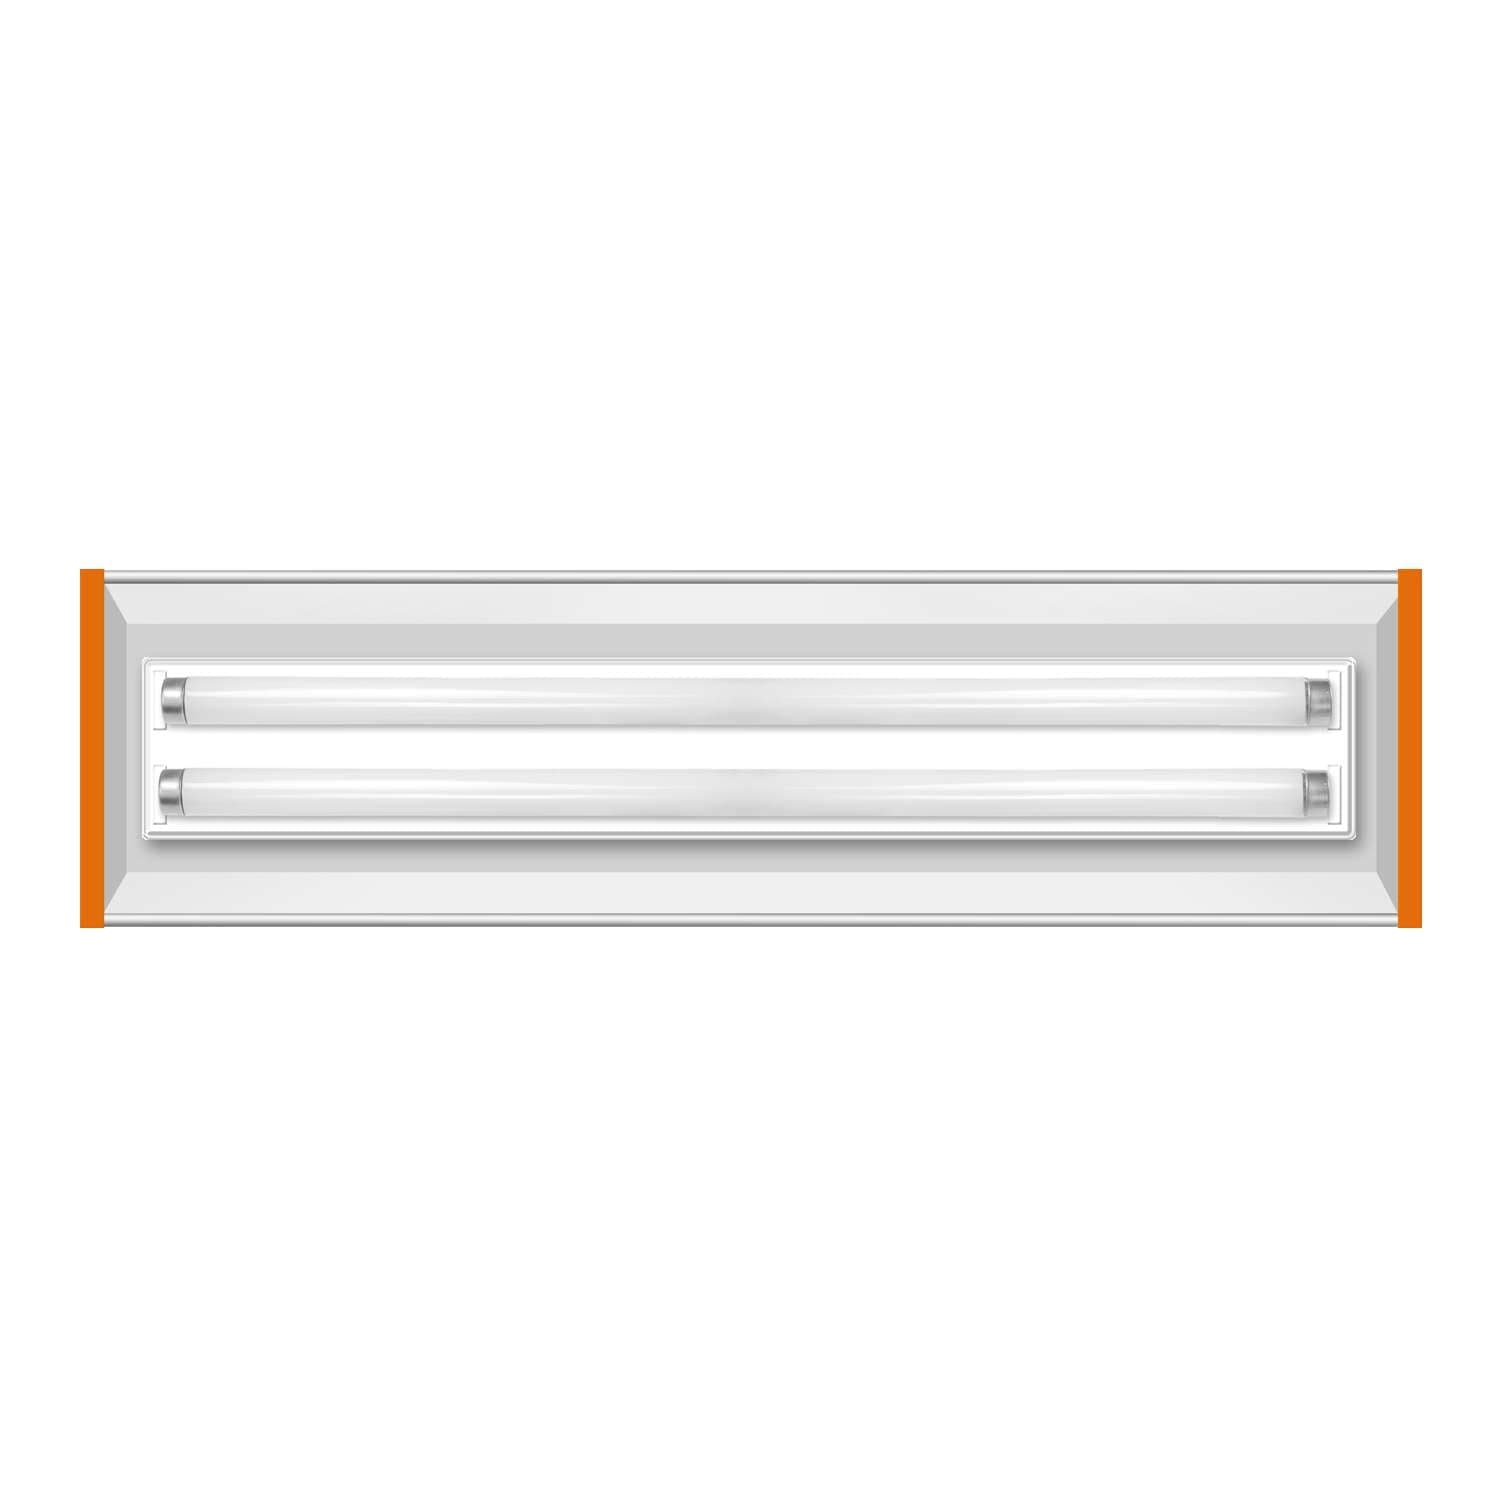 Auburn Tigers: Standard Pool Table Light - The Fan-Brand